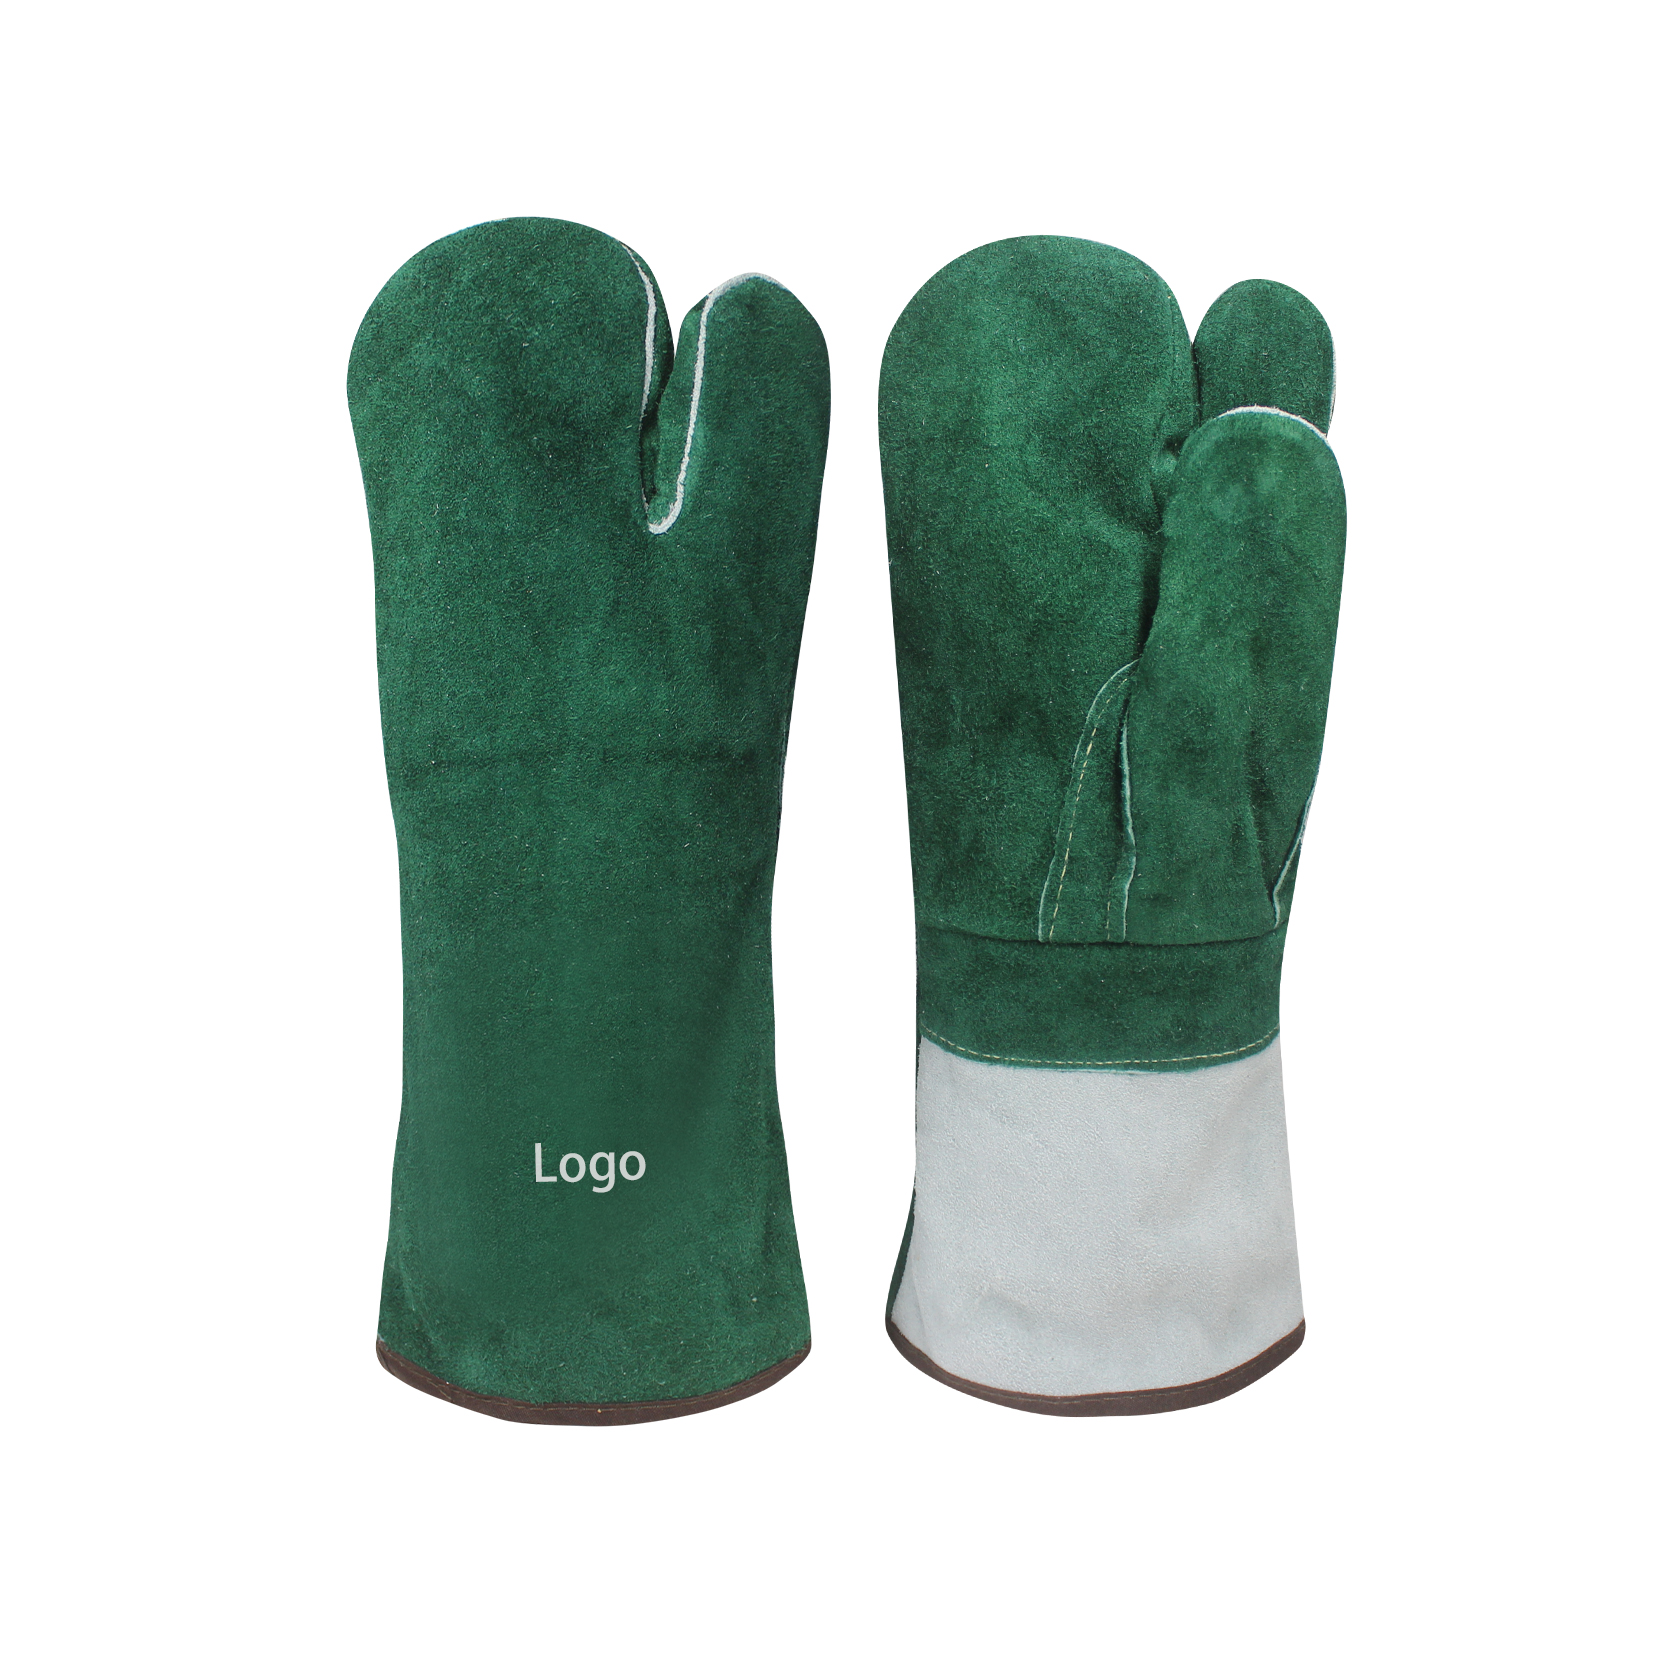 Leather Welding Gloves for Oven, Grill, Pot Holder, Tig ,BBQ Three Finger Welders’ Soft Cowhide Leather Long Welding Gloves